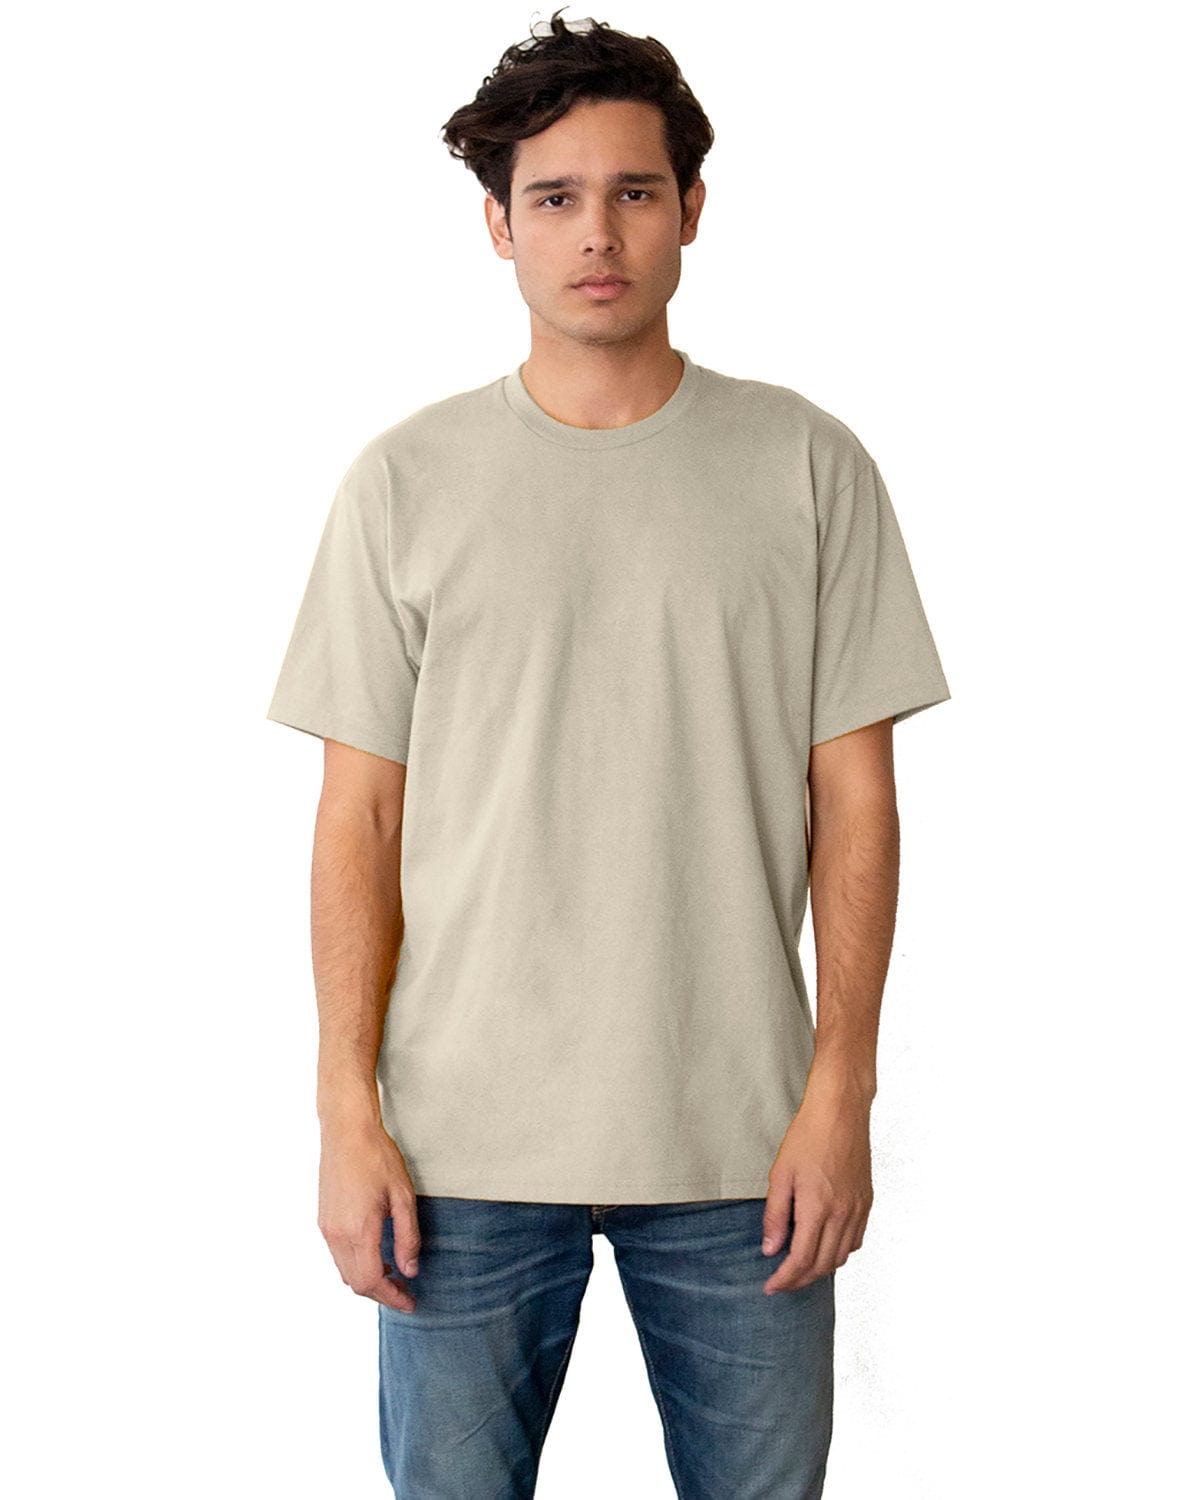 DISCONTINUED - Next Level Unisex Ideal Heavyweight T-Shirt